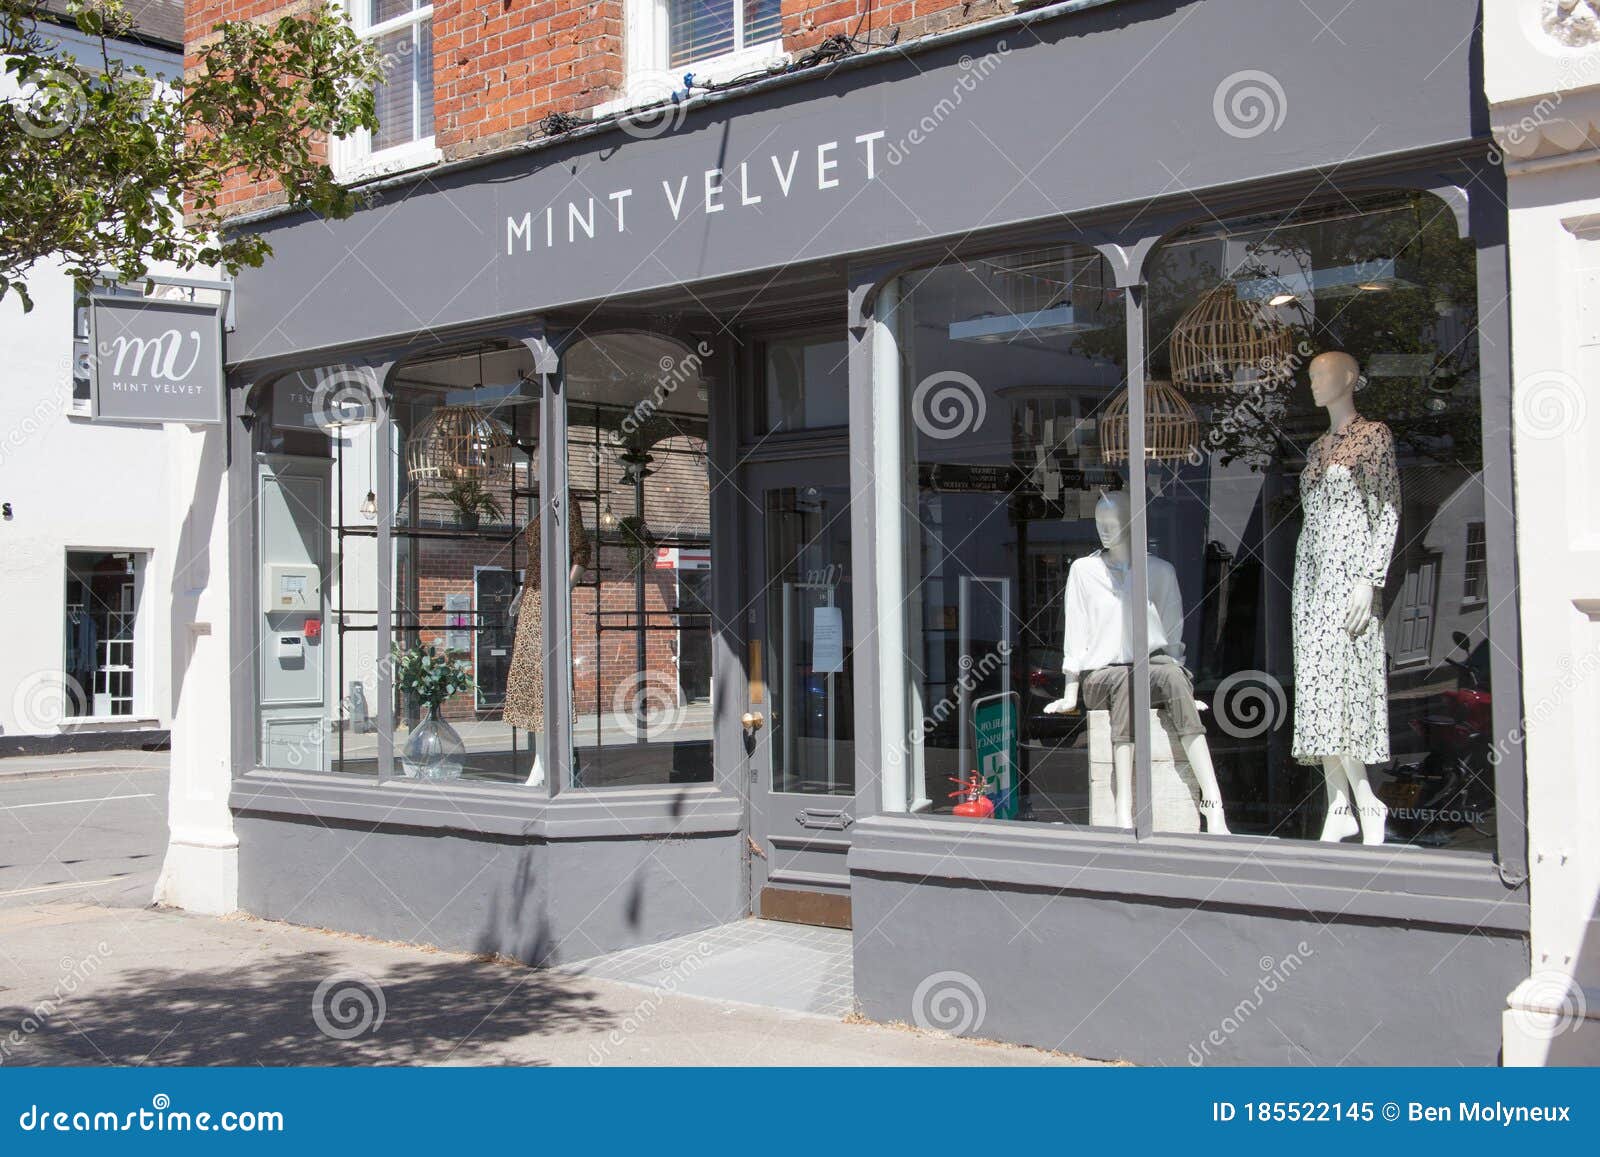 omroeper baai nicotine The Mint Velvet Shop in Marlow, Buckinghamshire in the United Kingdom  Editorial Image - Image of great, britain: 185522145